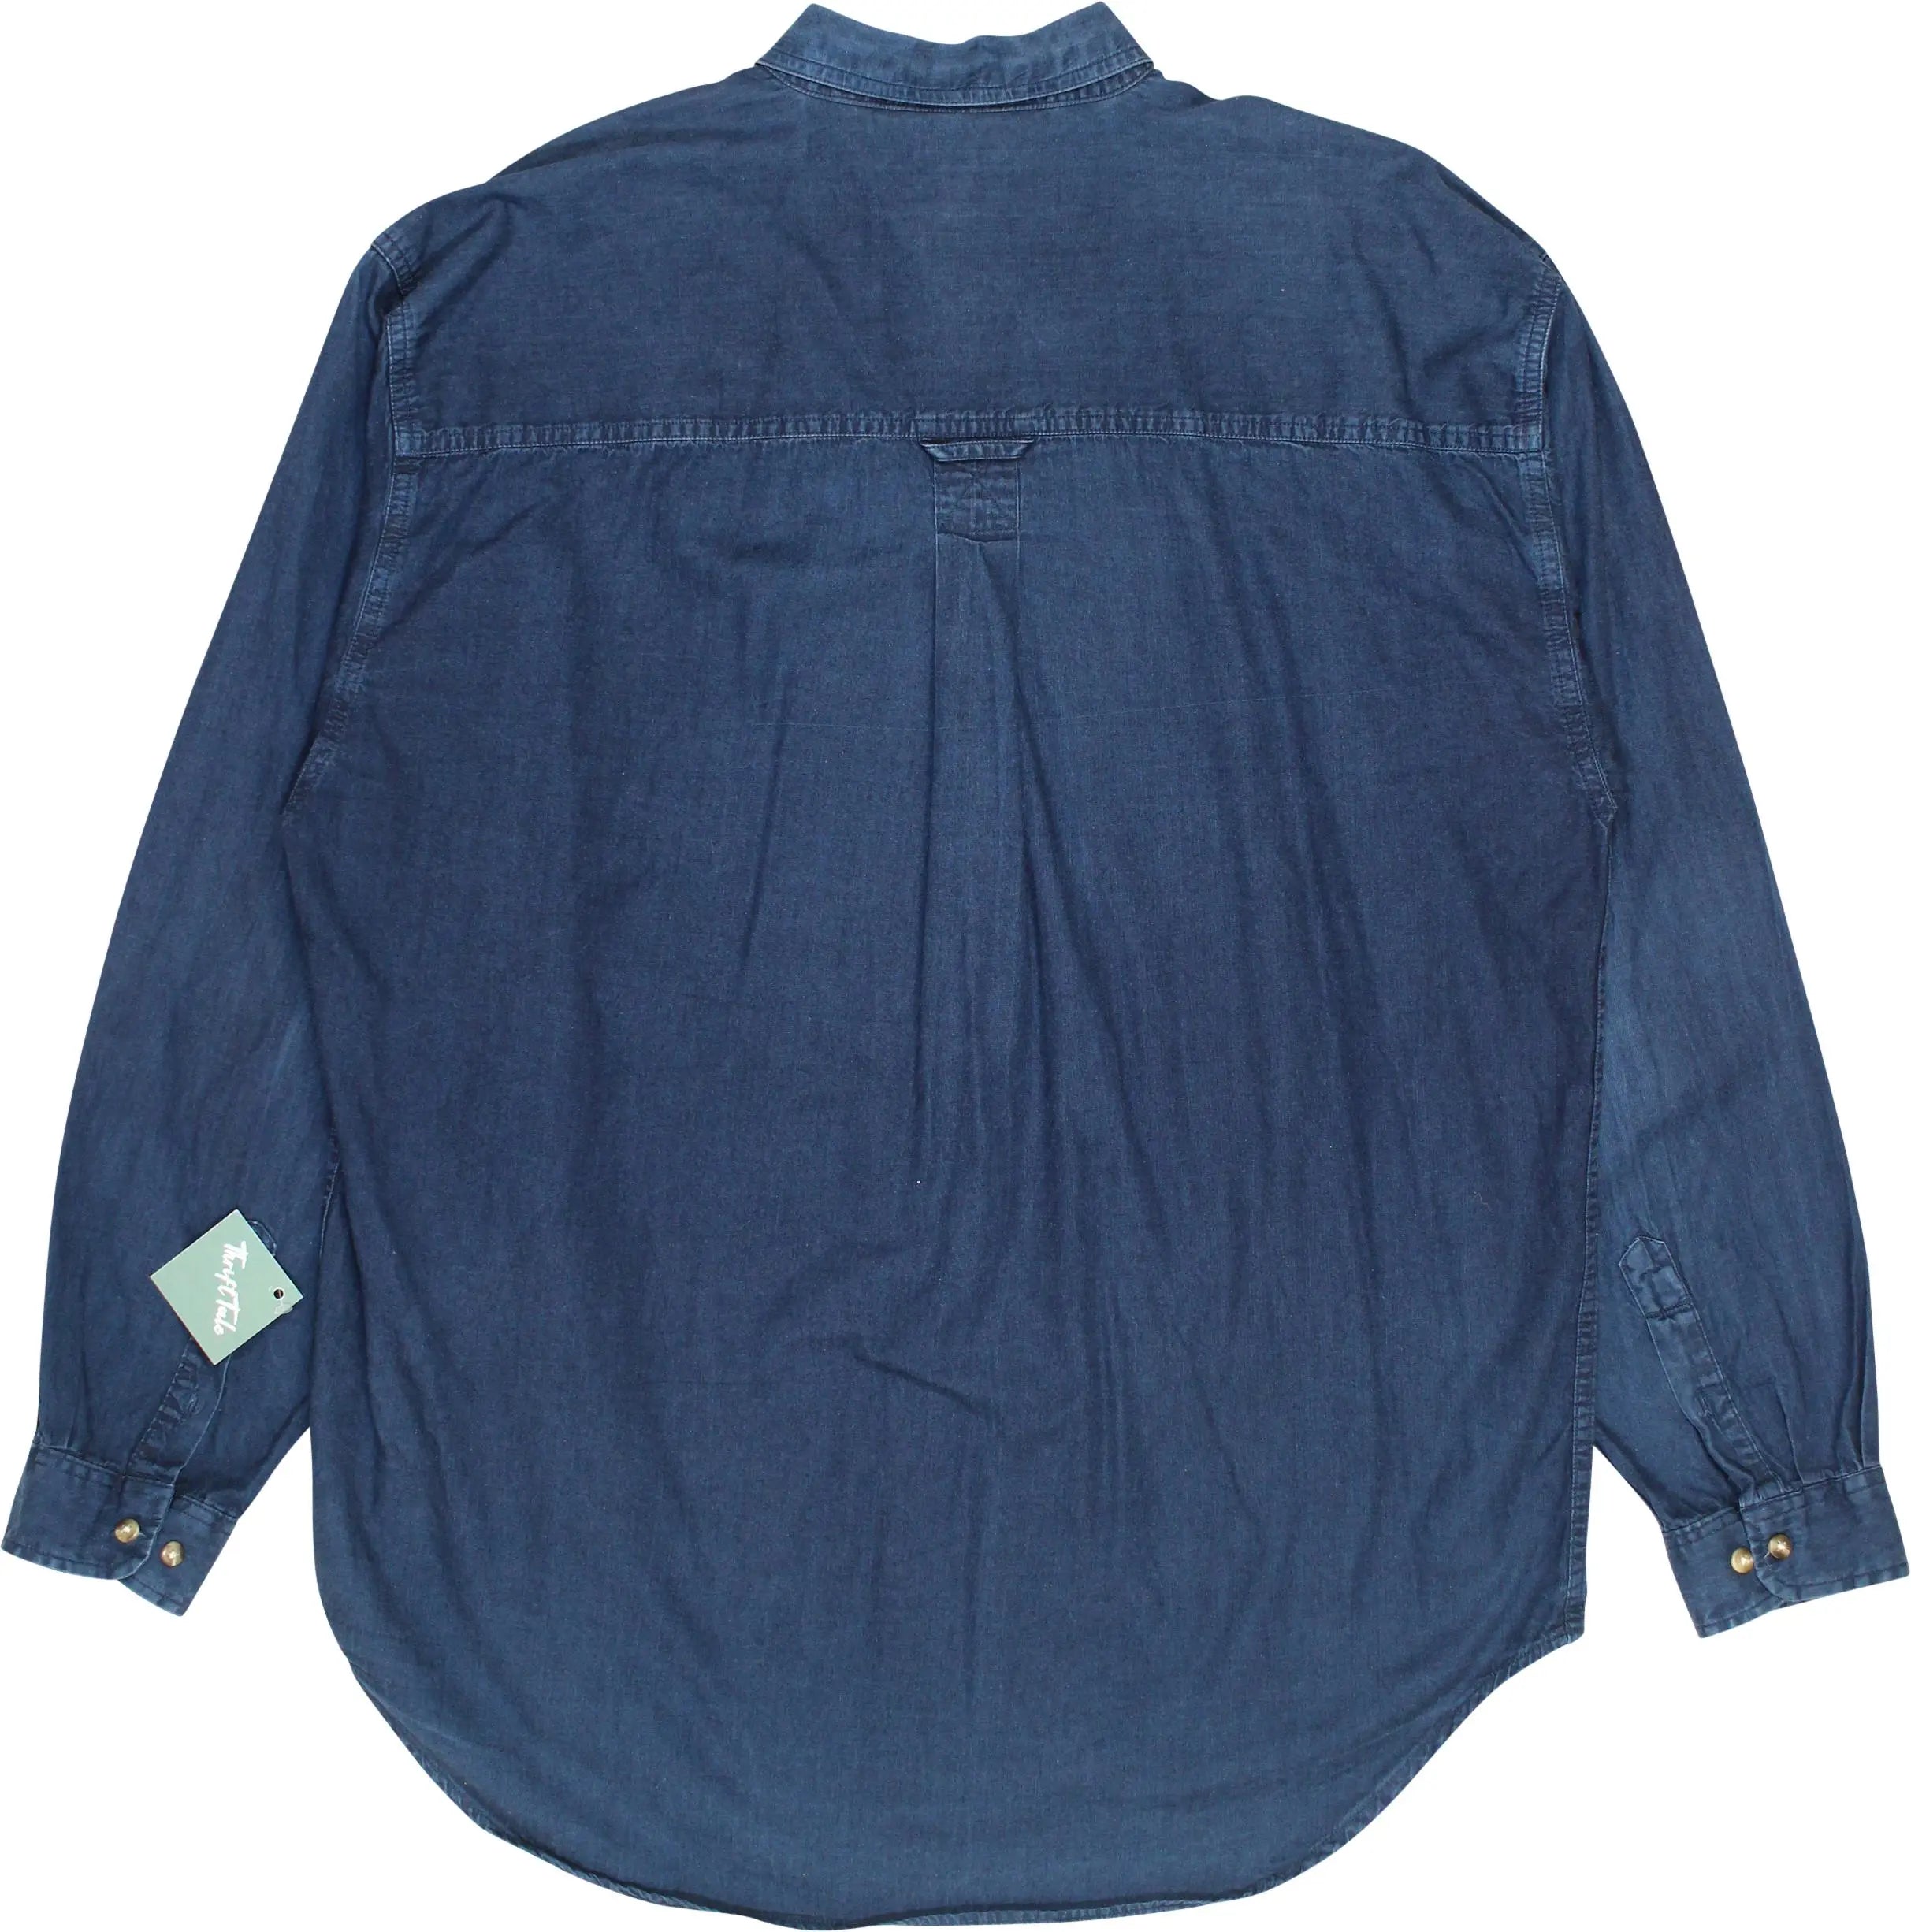 Pionier - Denim Shirt- ThriftTale.com - Vintage and second handclothing